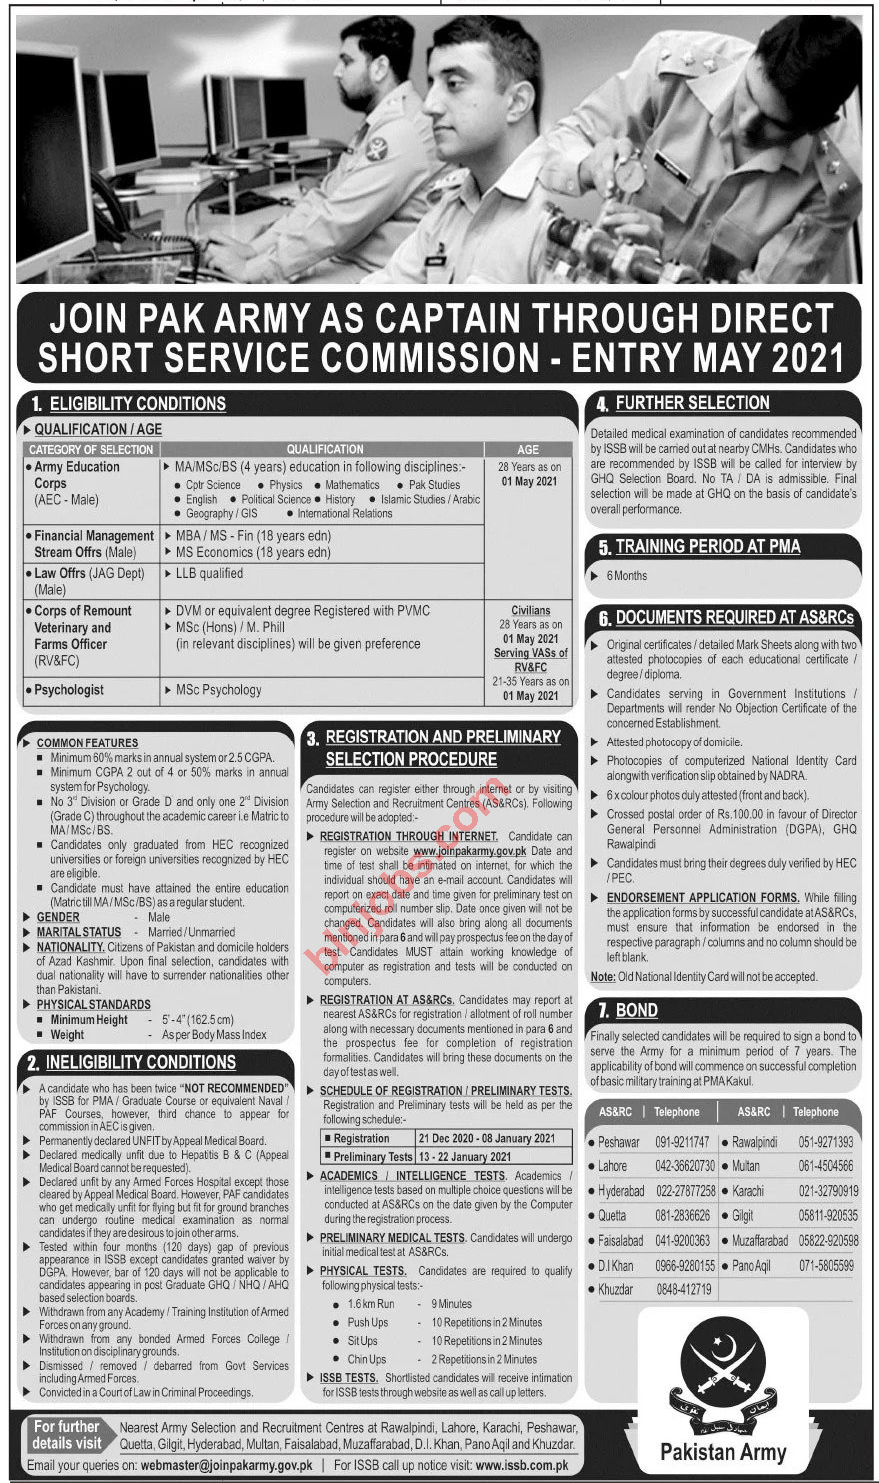 Pak Army Jobs as Captain through Short Service Commission